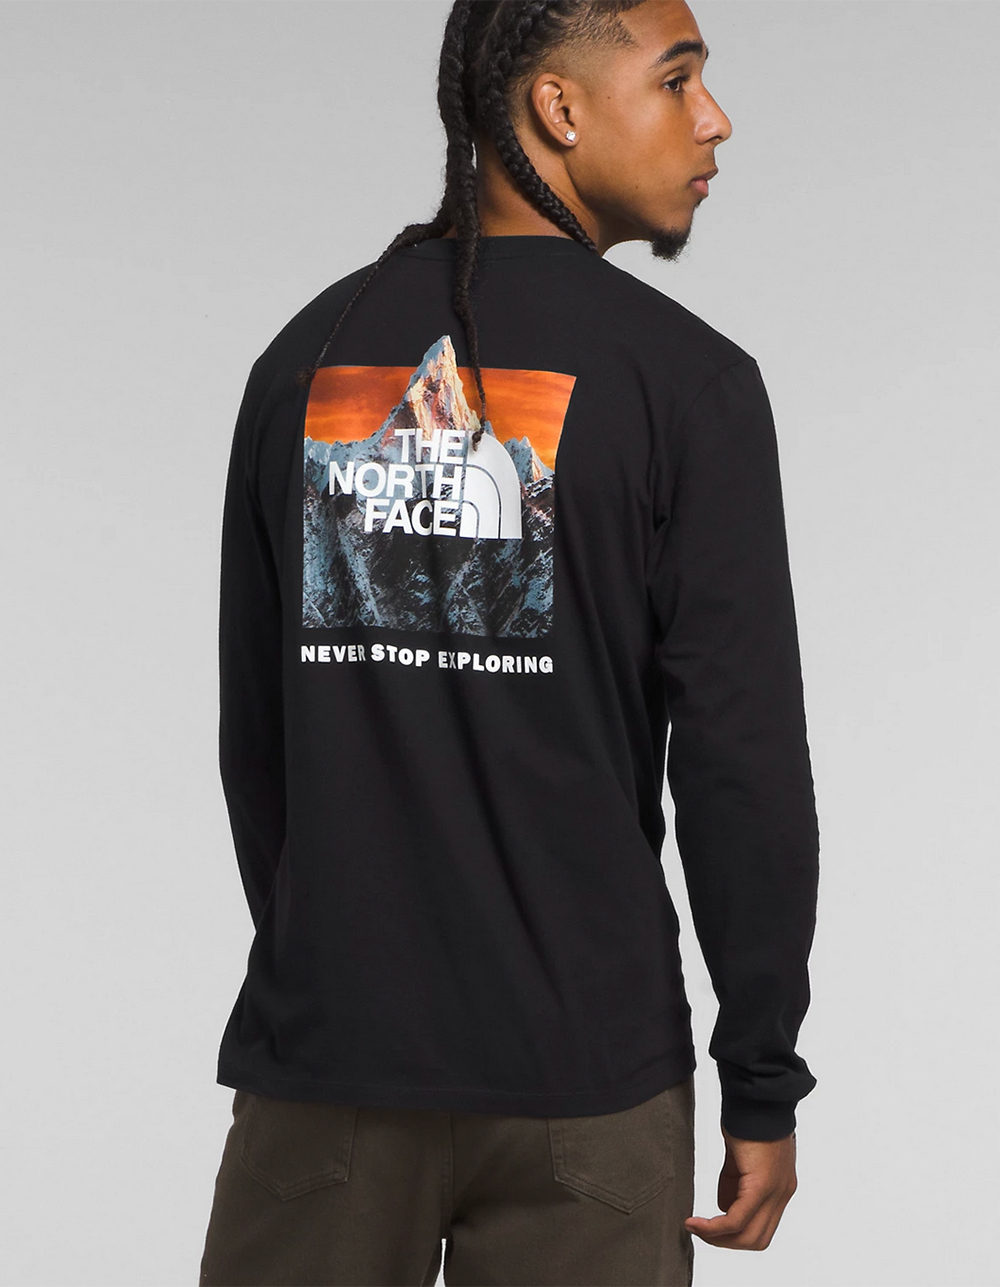 The North Face Long-Sleeve T-shirt. Men's Size XL. Dark gray